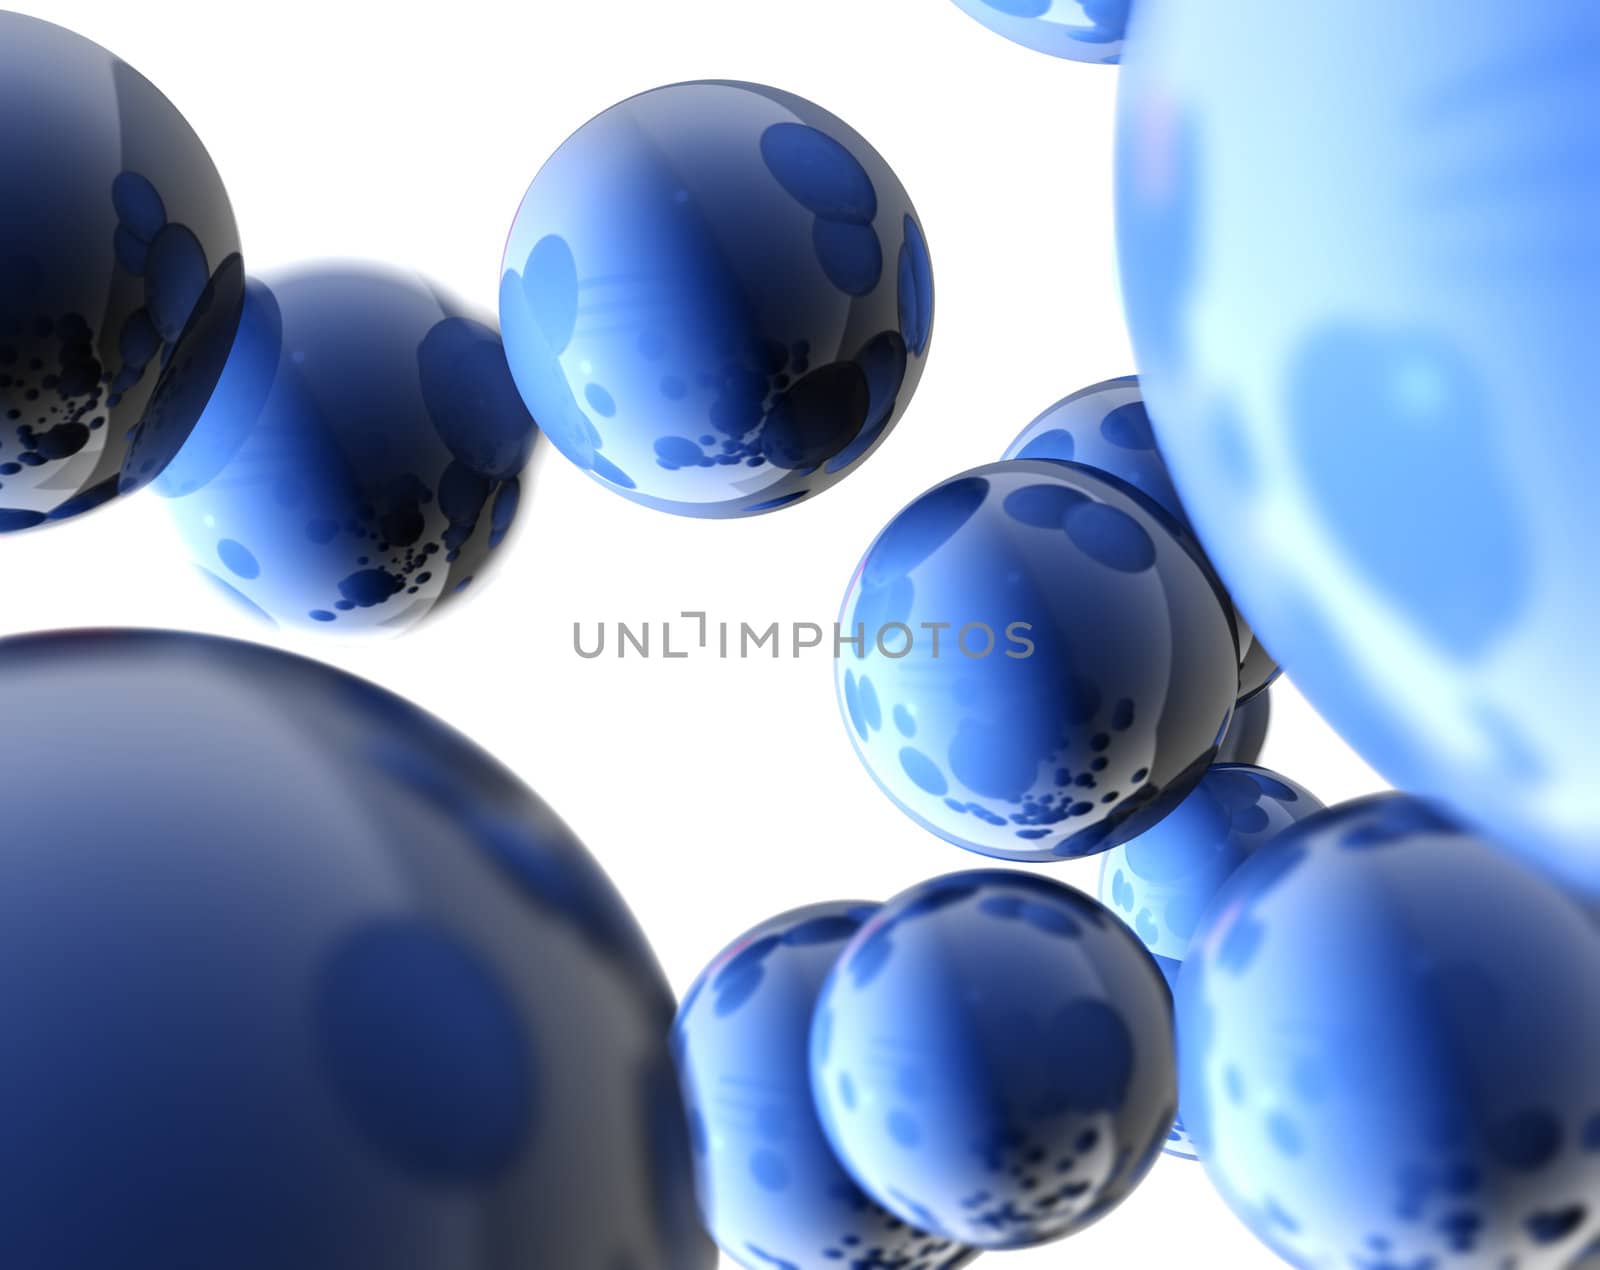 3d image of blue reflective balls